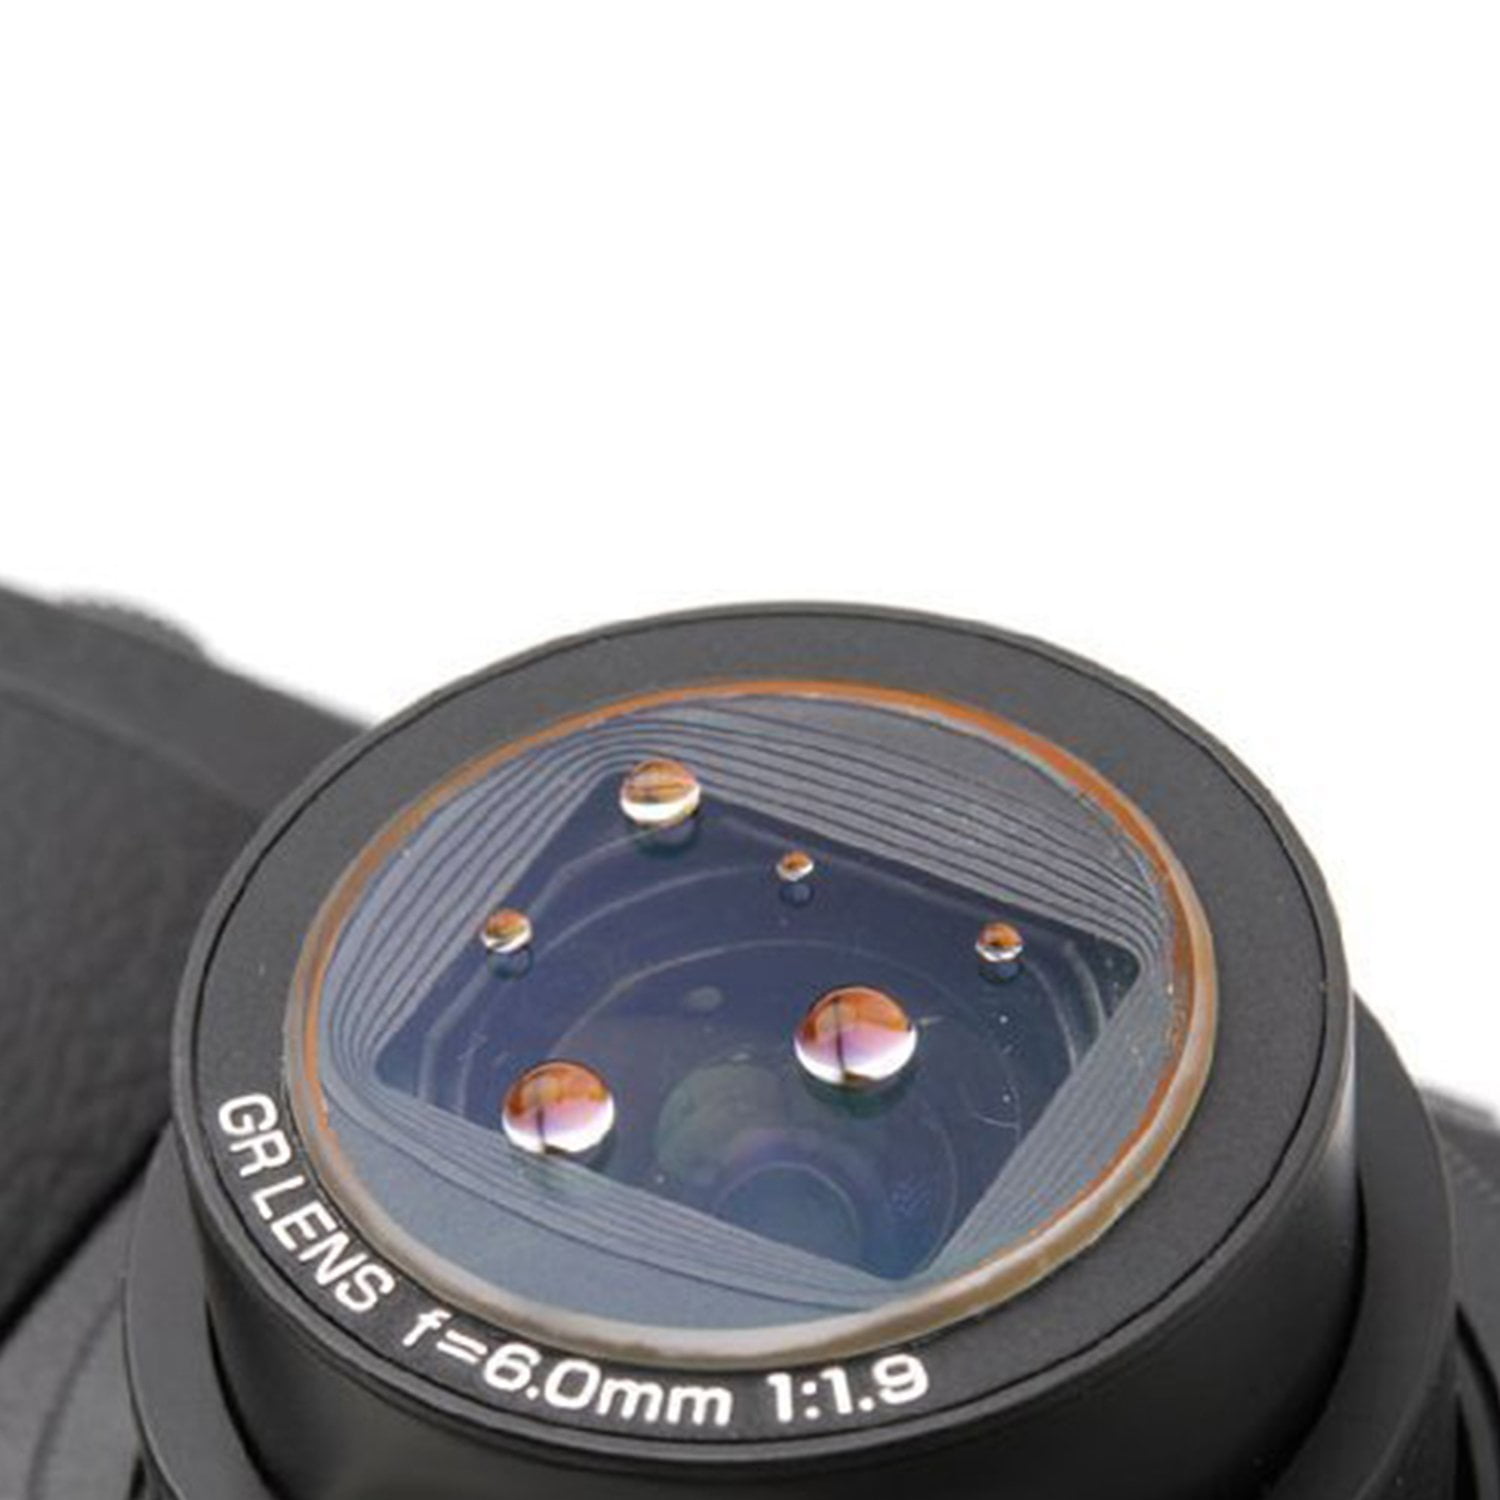 Megagear Ultraviolet Uv Camera Lens Filter And Protector For Sony Cyber Shot Dsc Rx100 Vi Walmart Com Walmart Com